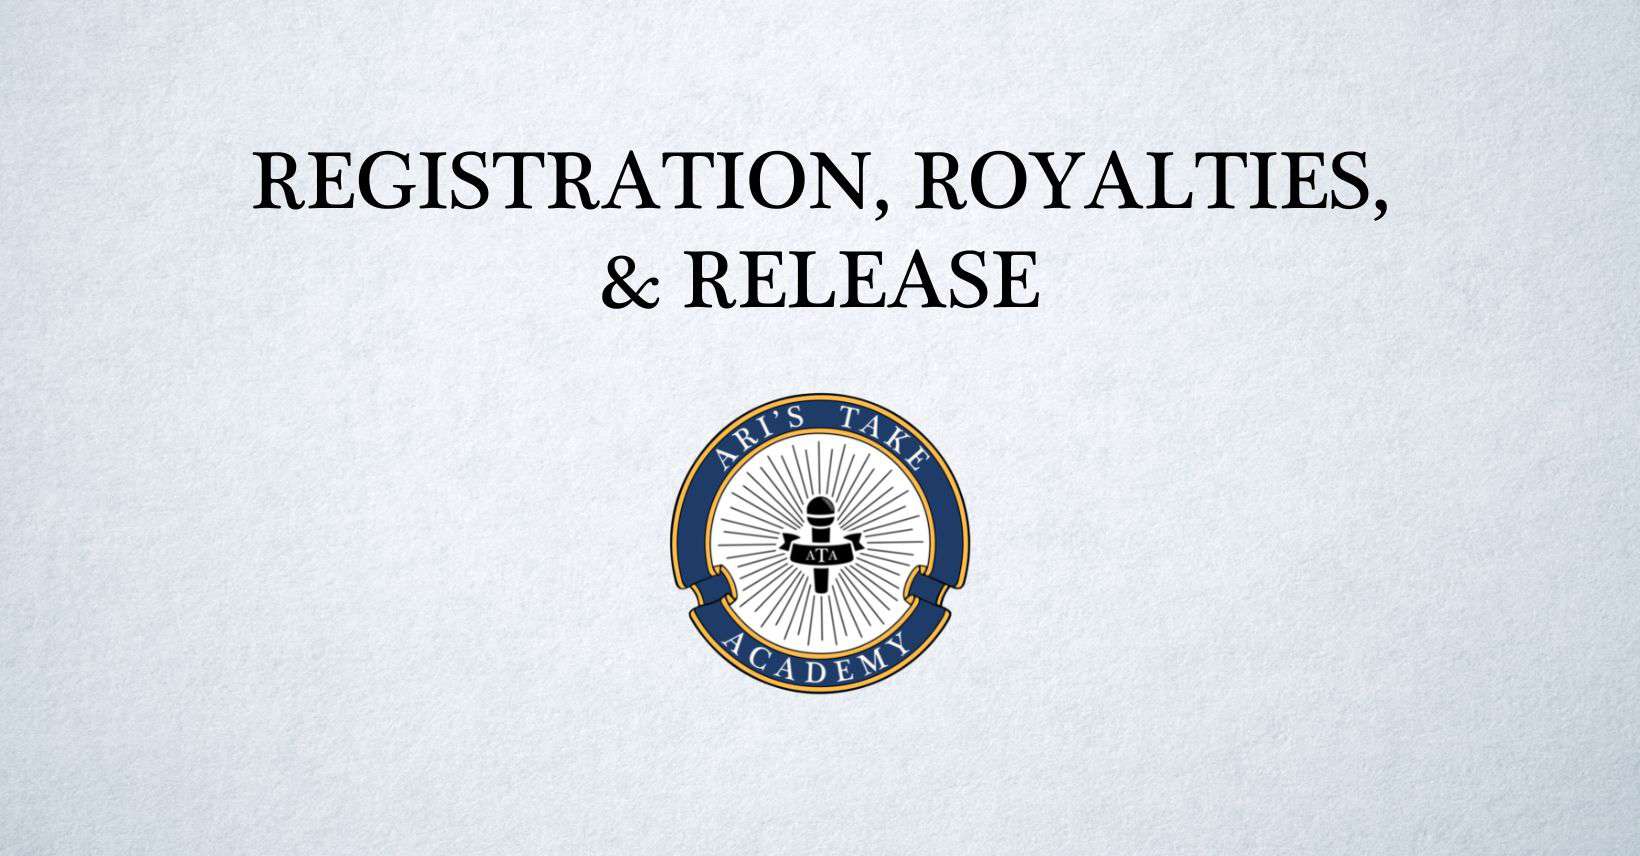 Registration, Royalties, & Release